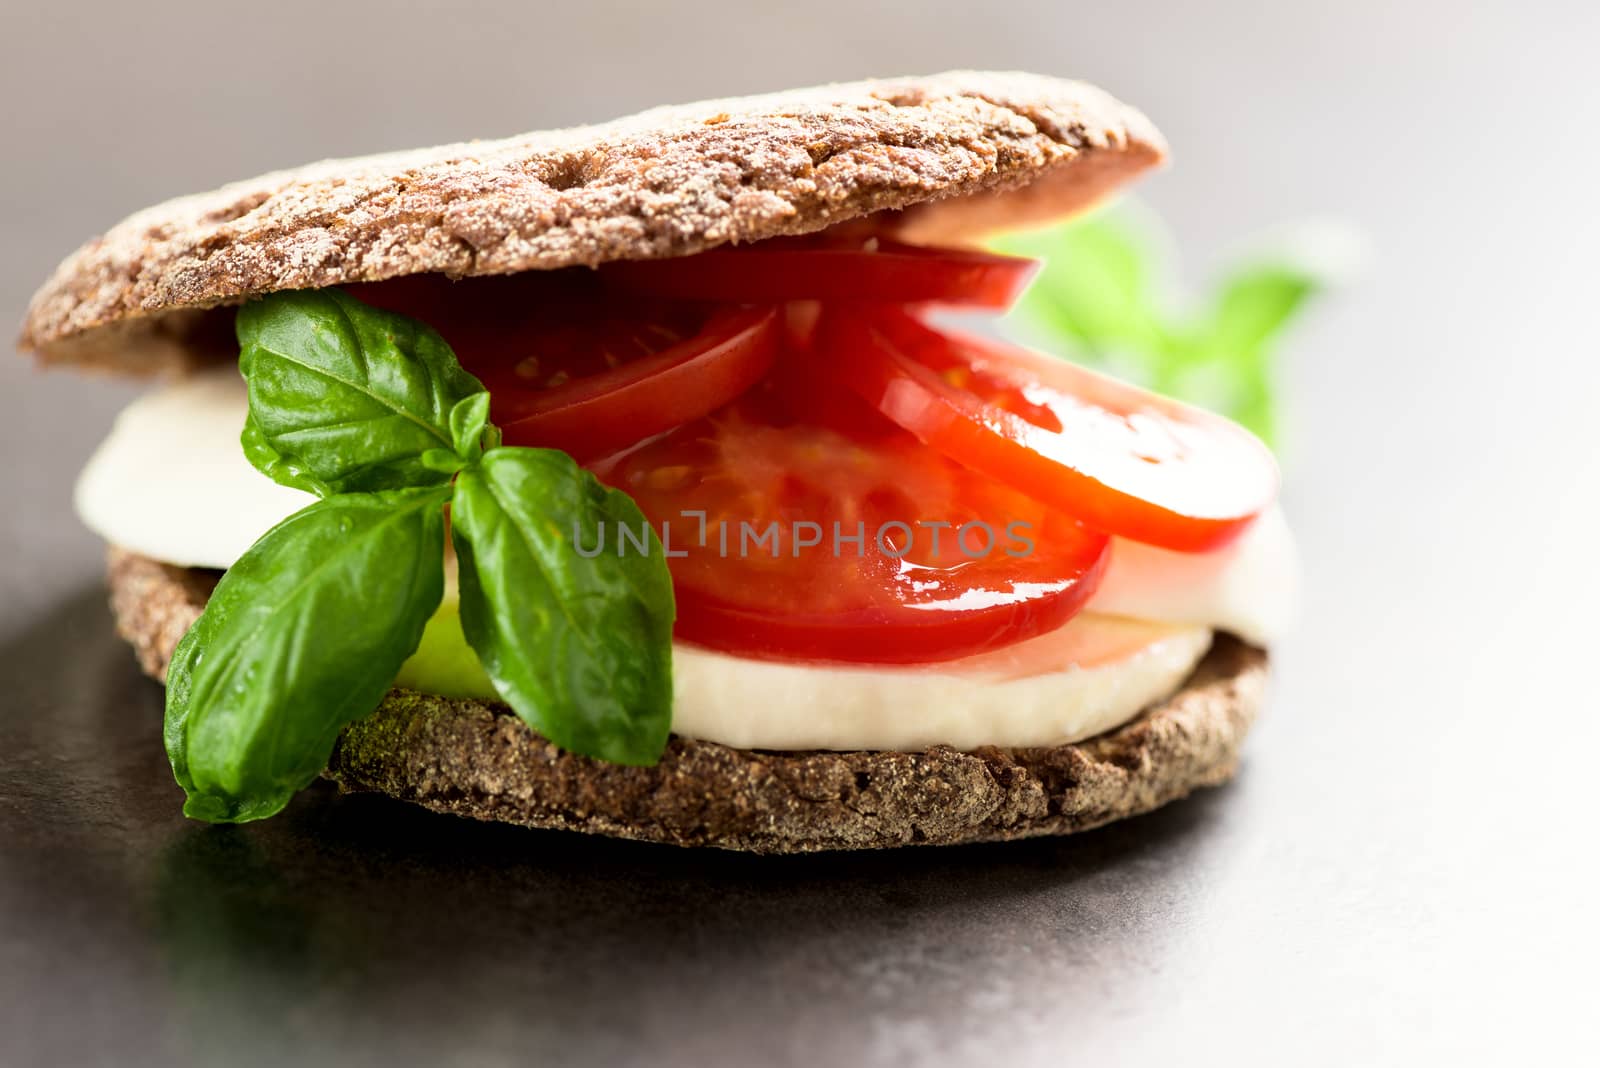 Sandwich with mozzarella tomatoes and rye bread by Nanisimova